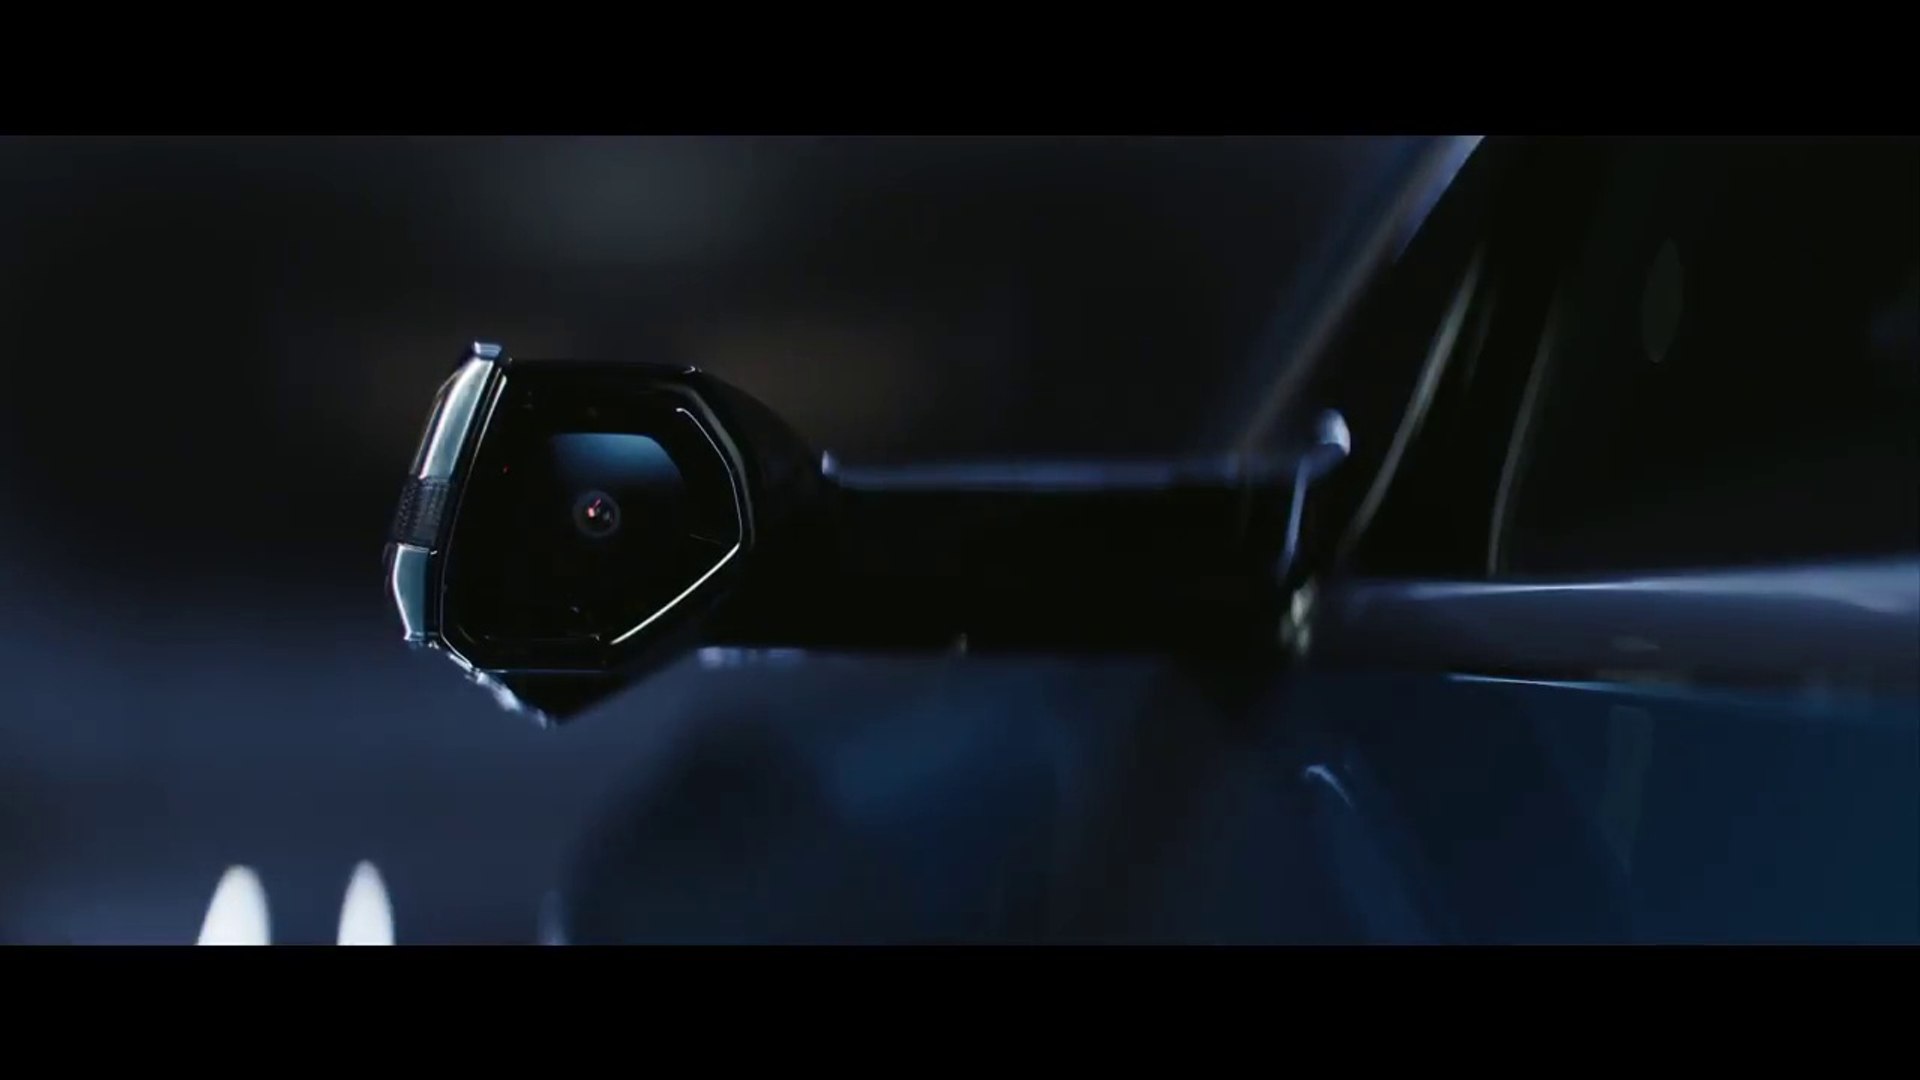 VÍDEO: Oficial: así son los retrovisores con cámara del Audi e-tron - Vídeo  Dailymotion